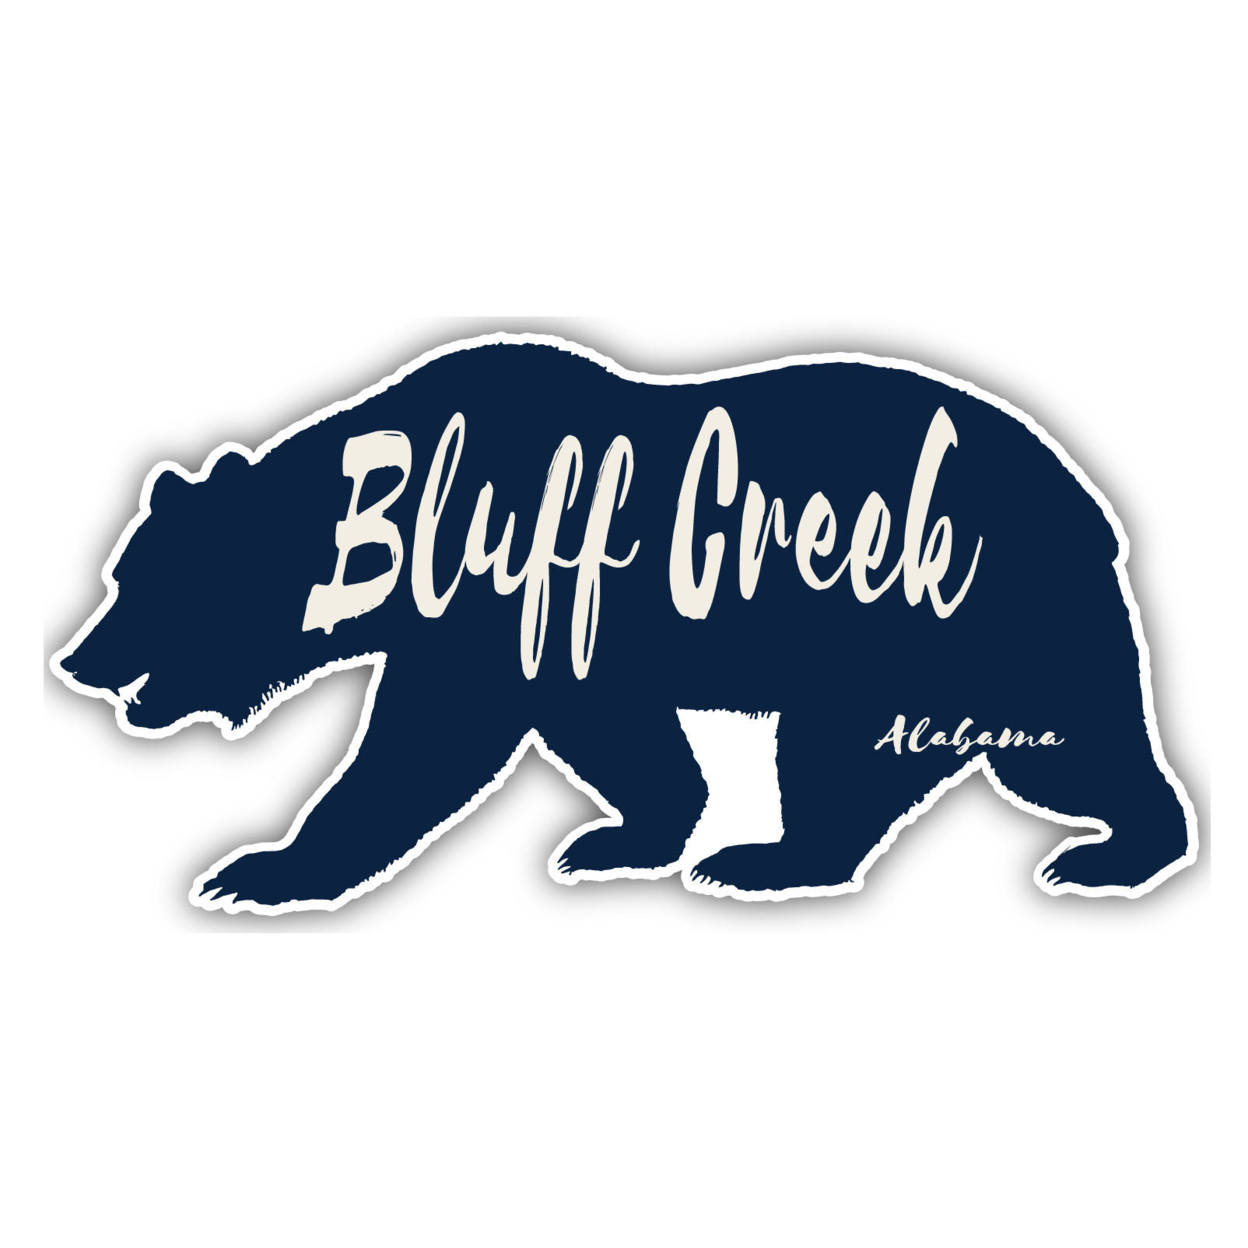 Bluff Creek Alabama Souvenir Decorative Stickers (Choose Theme And Size) - 4-Pack, 10-Inch, Bear